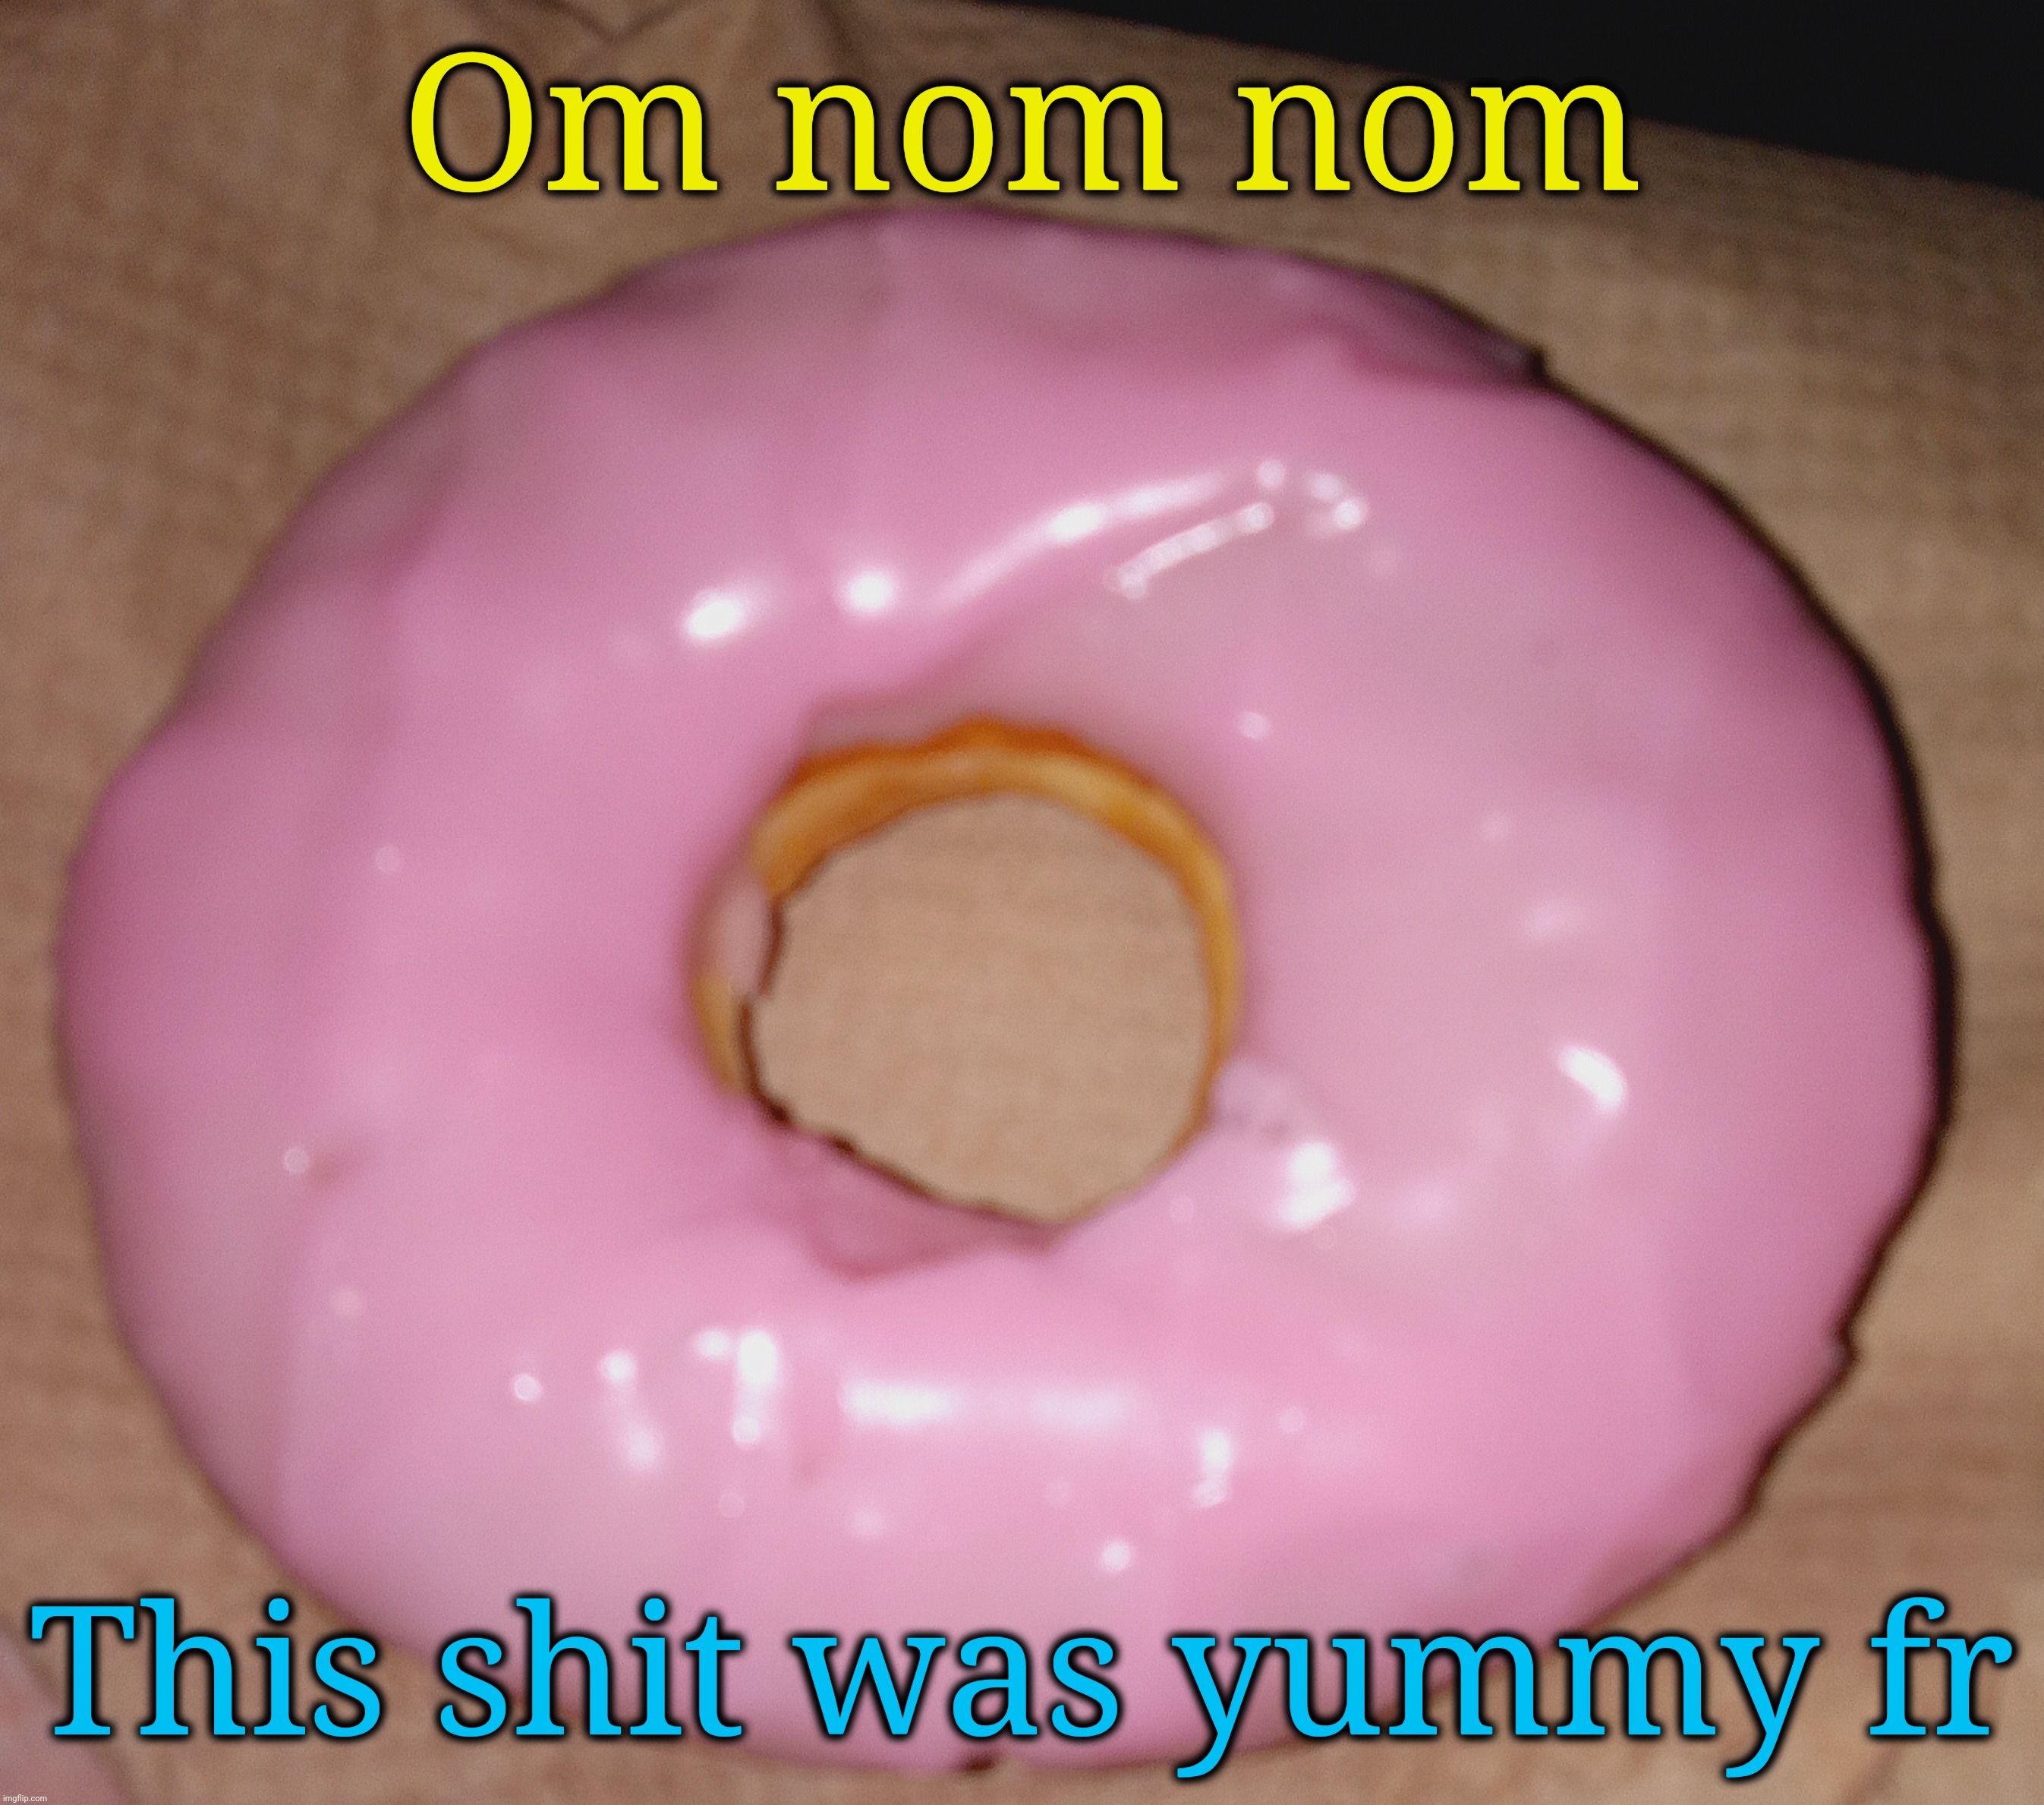 Om nom nom; This shit was yummy fr | made w/ Imgflip meme maker